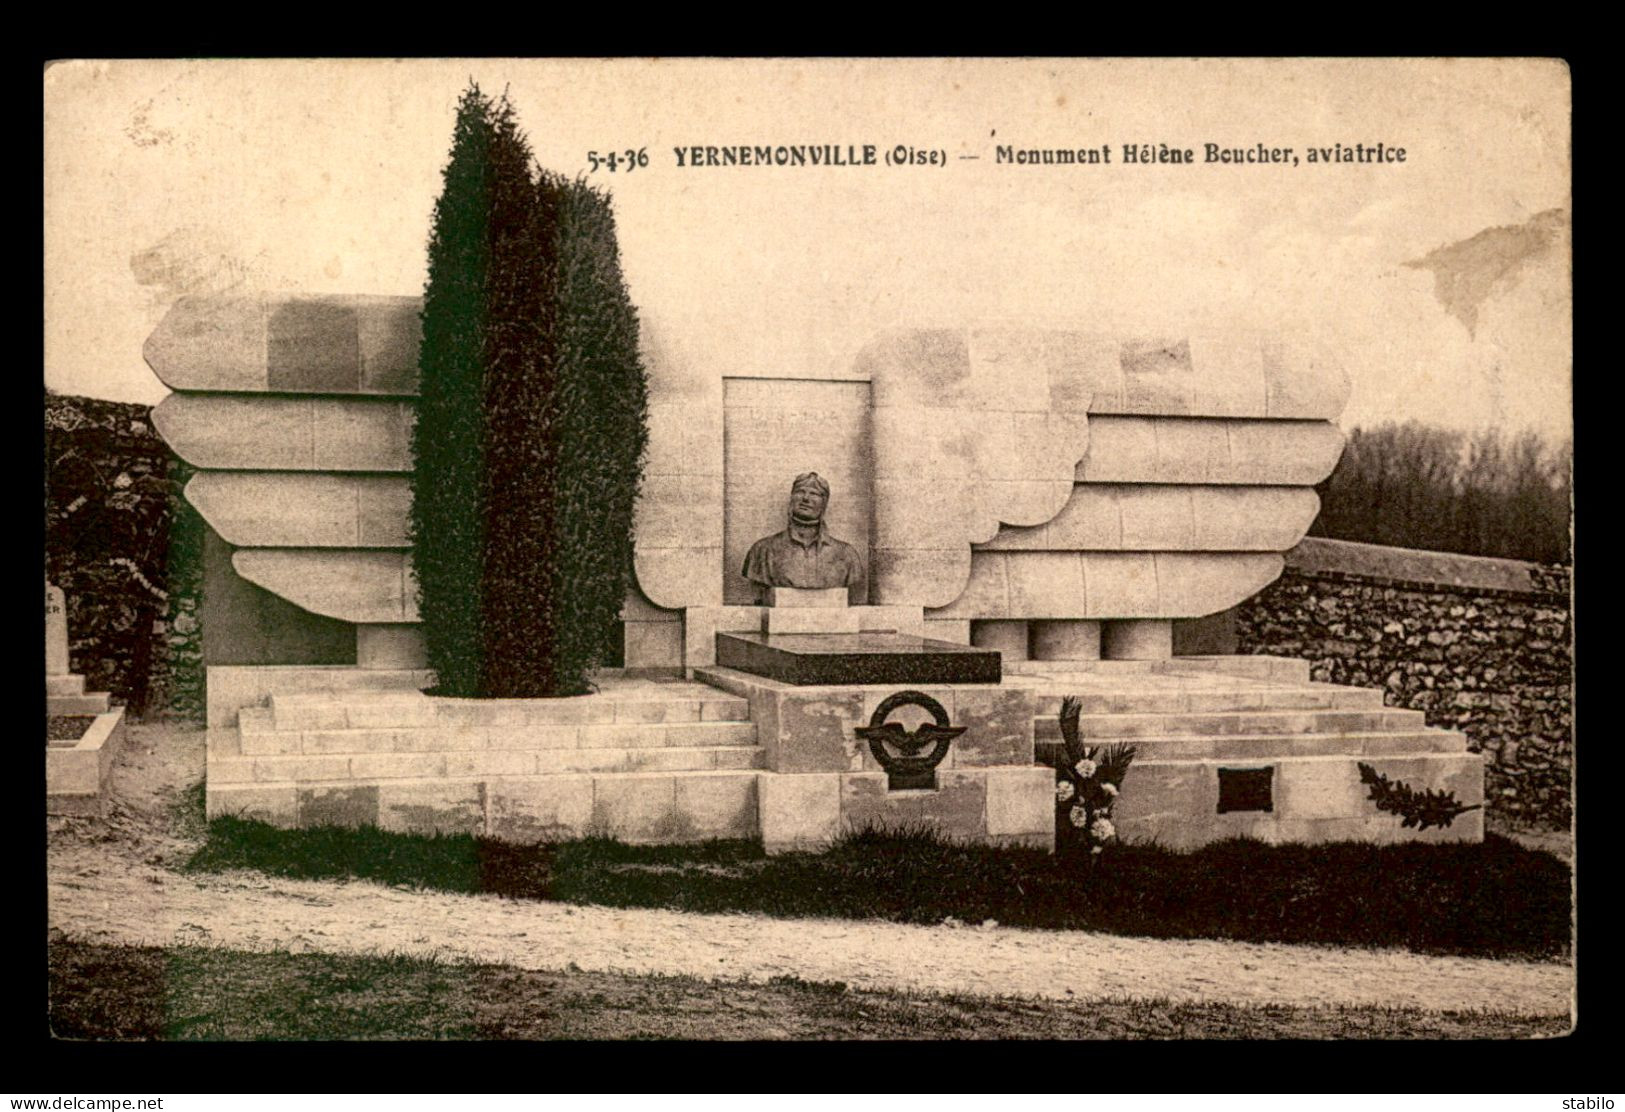 AVIATION - YERNEMONVILLE - MONUMENT D'HELENE BOUCHER - Airmen, Fliers